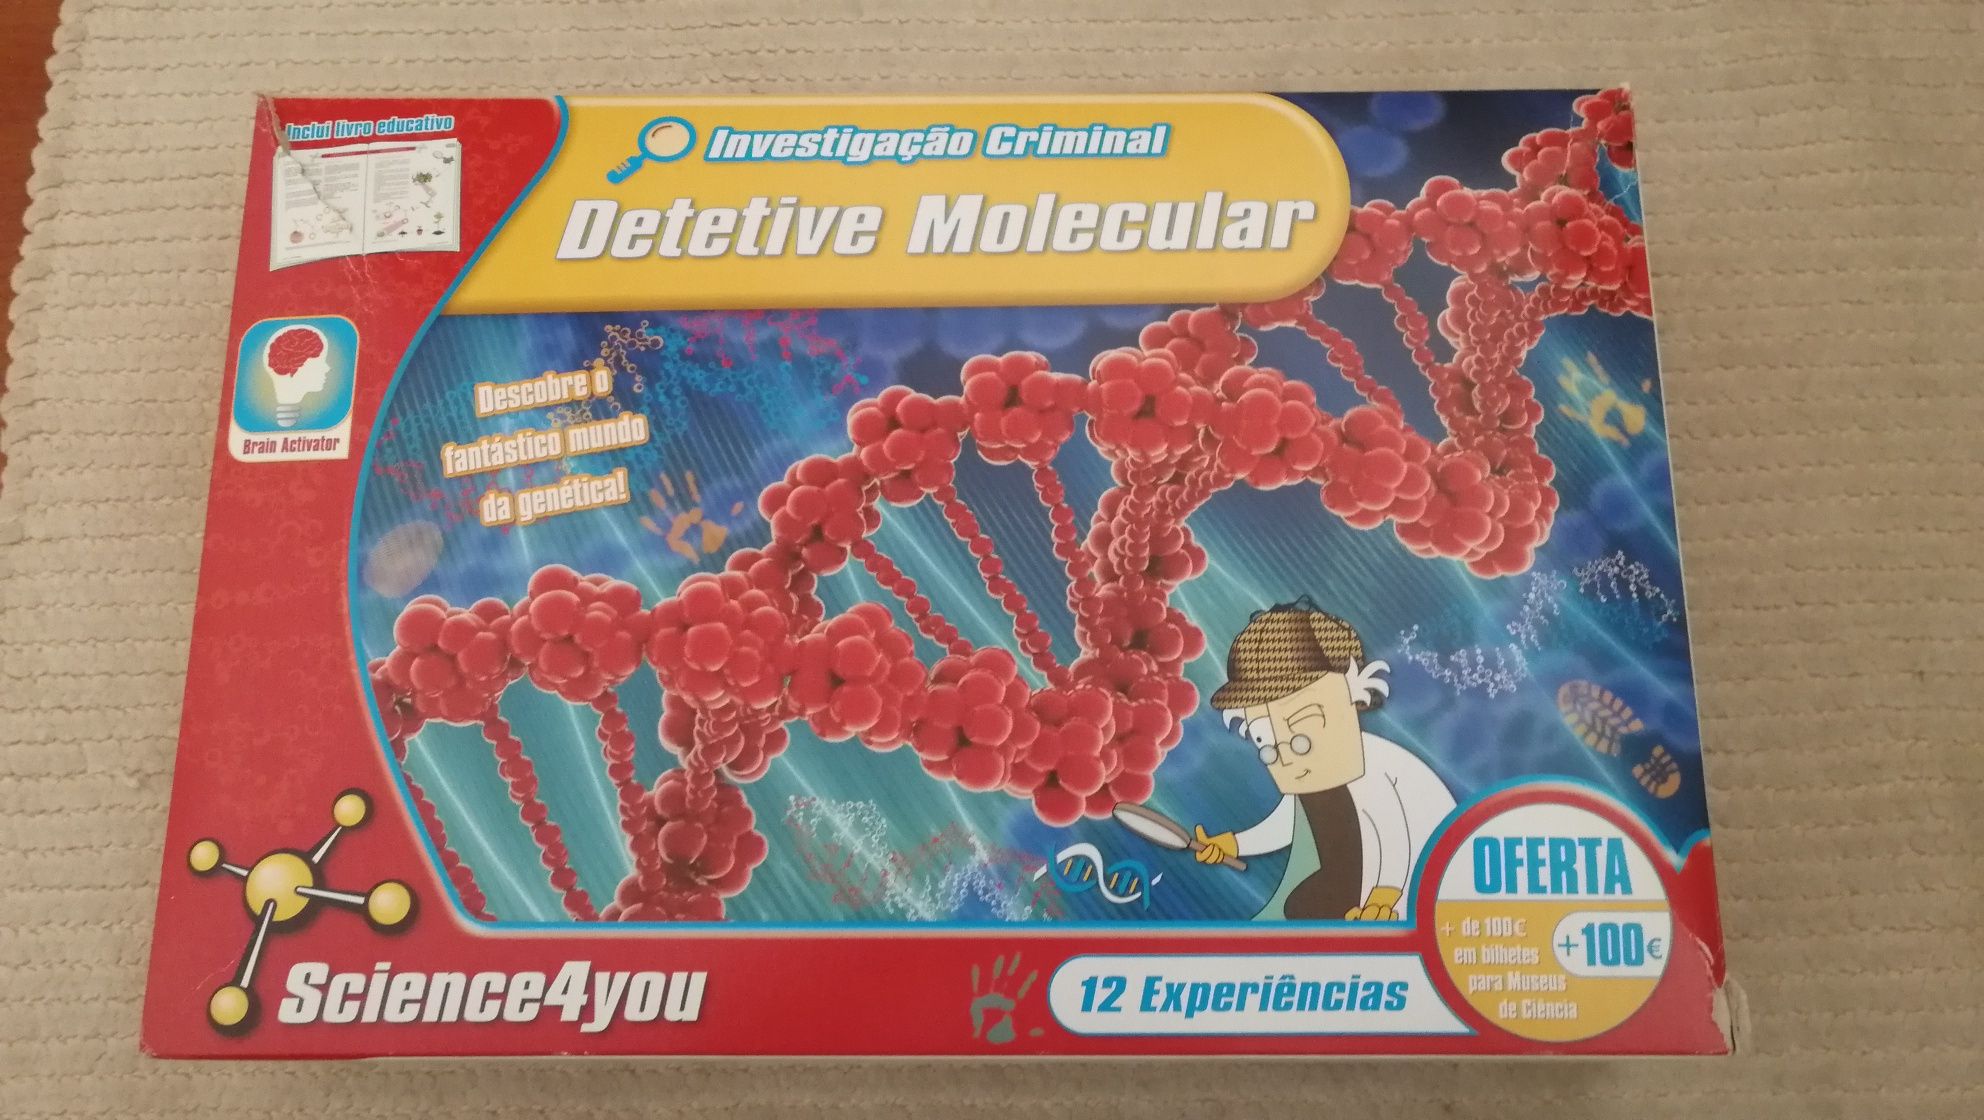 Detetive Molecular Investigação criminal - Kit Science4you